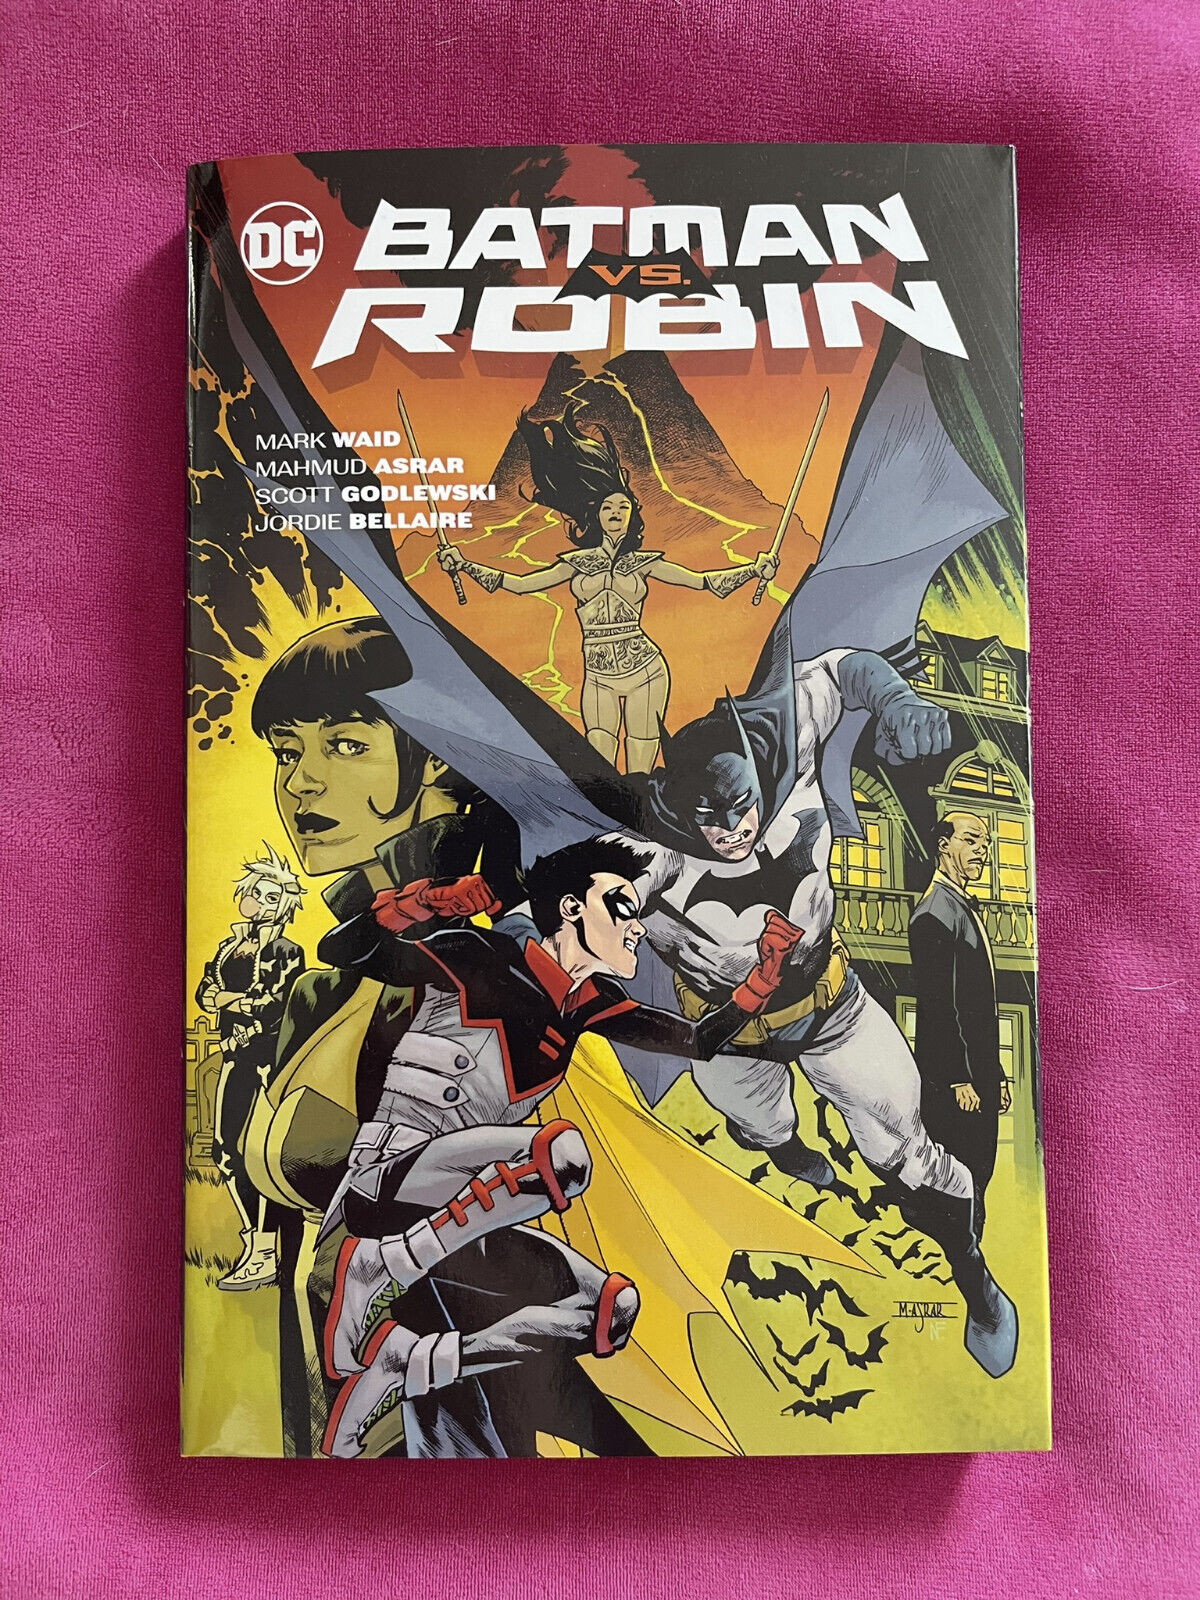 Batman vs Robin by Mark Waid Hardcover